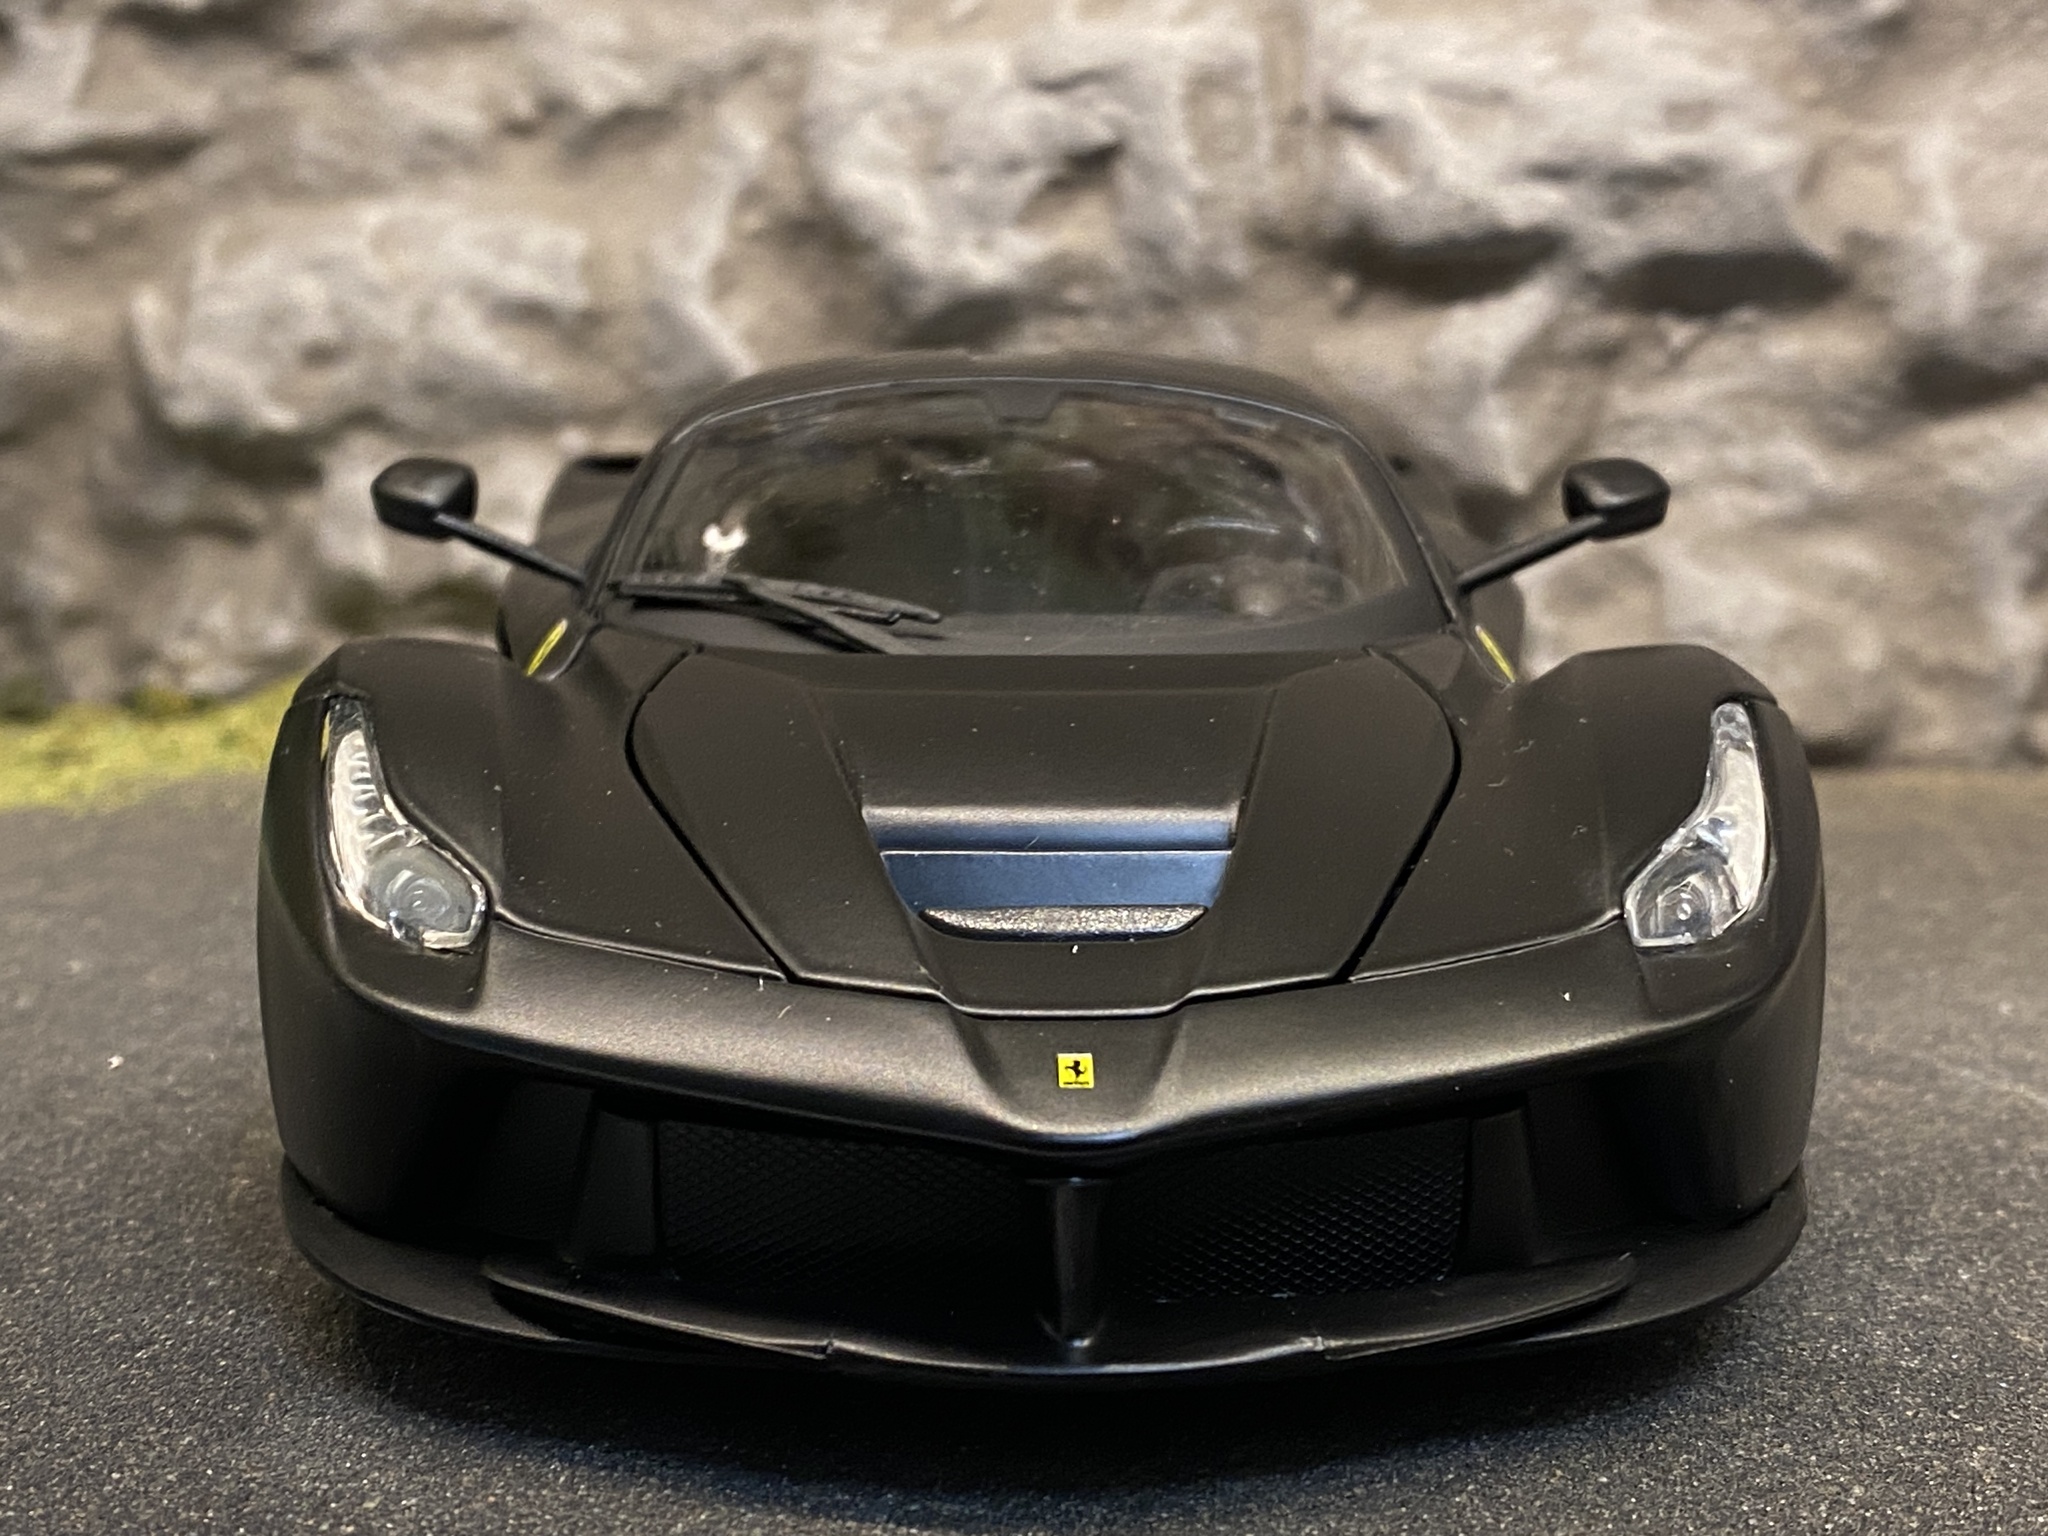 Skala 1/18 2014 La Ferrari "Deluxe Signature Series", Matt svart från Bburago